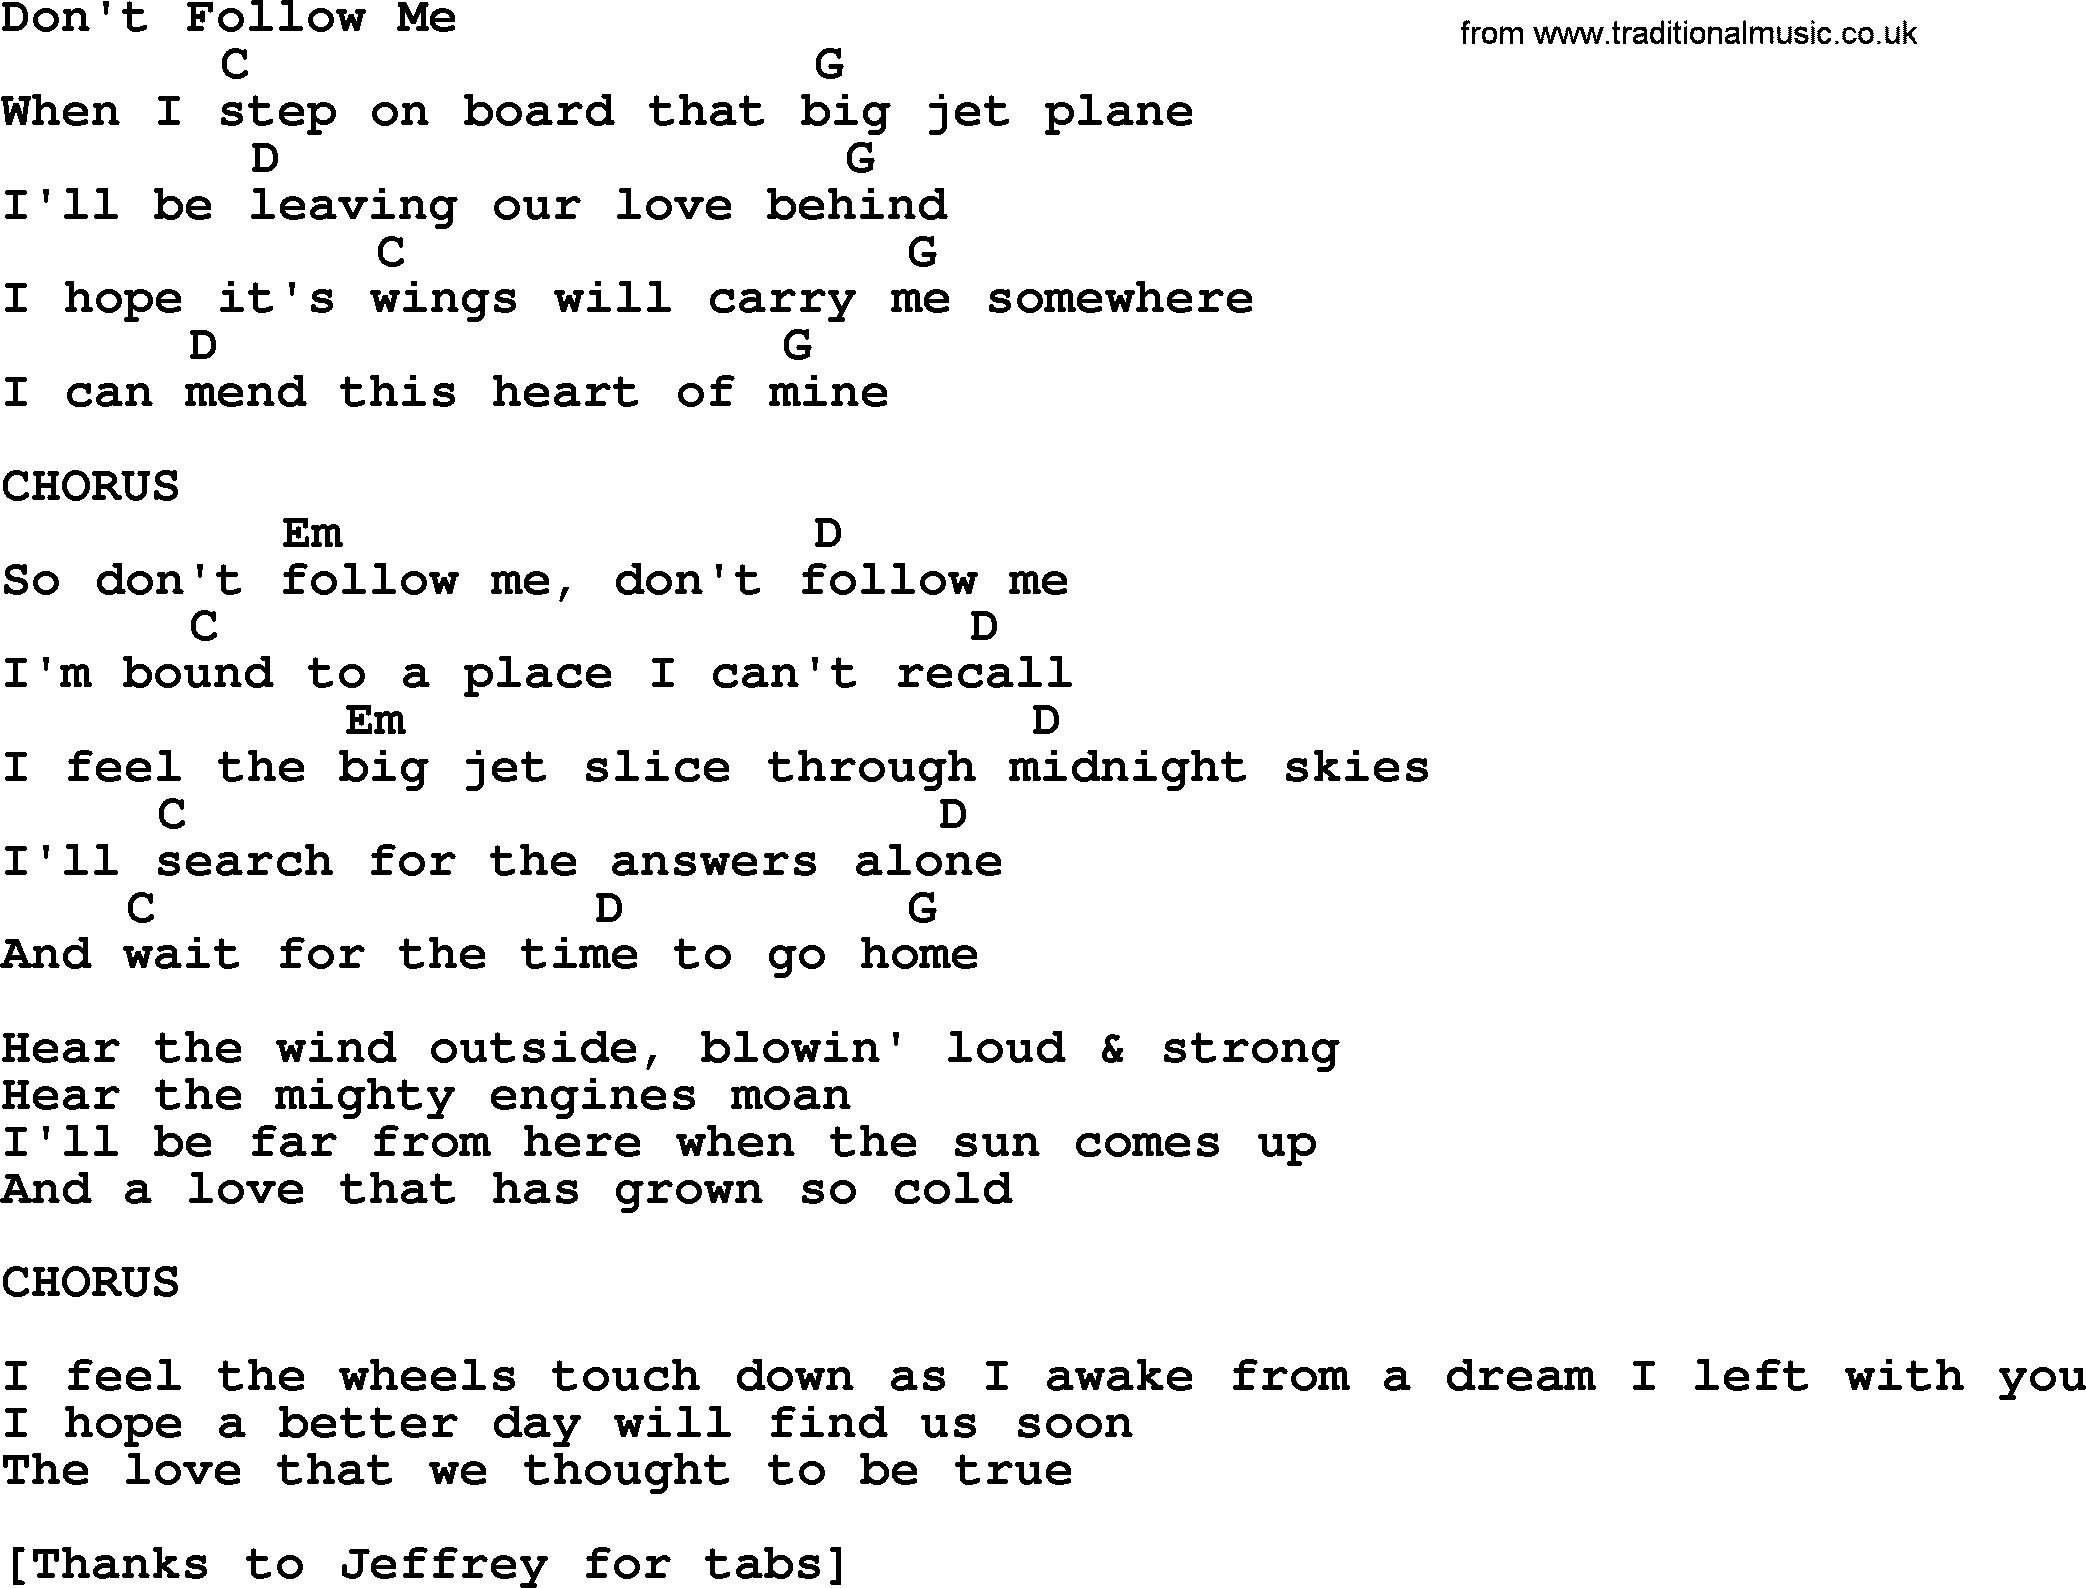 Bluegrass song: Don't Follow Me, lyrics and chords